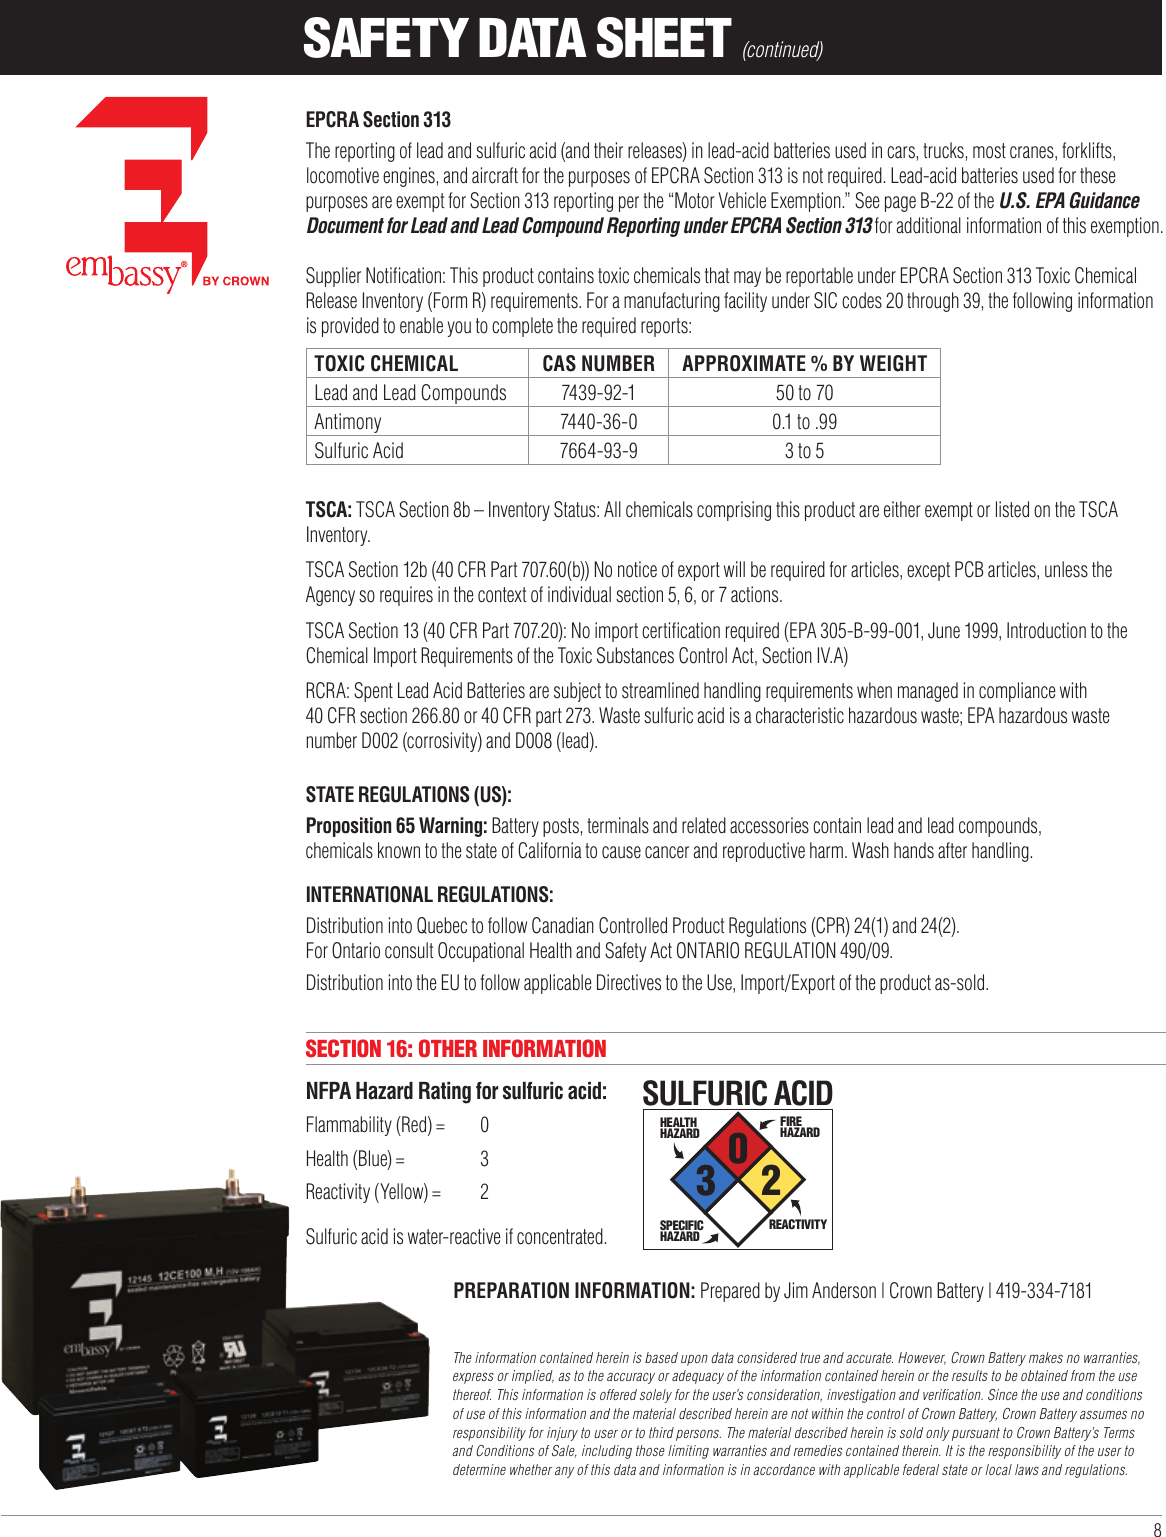 Page 8 of 8 - 551452 2 Liberty Battery Safety Data Sheet